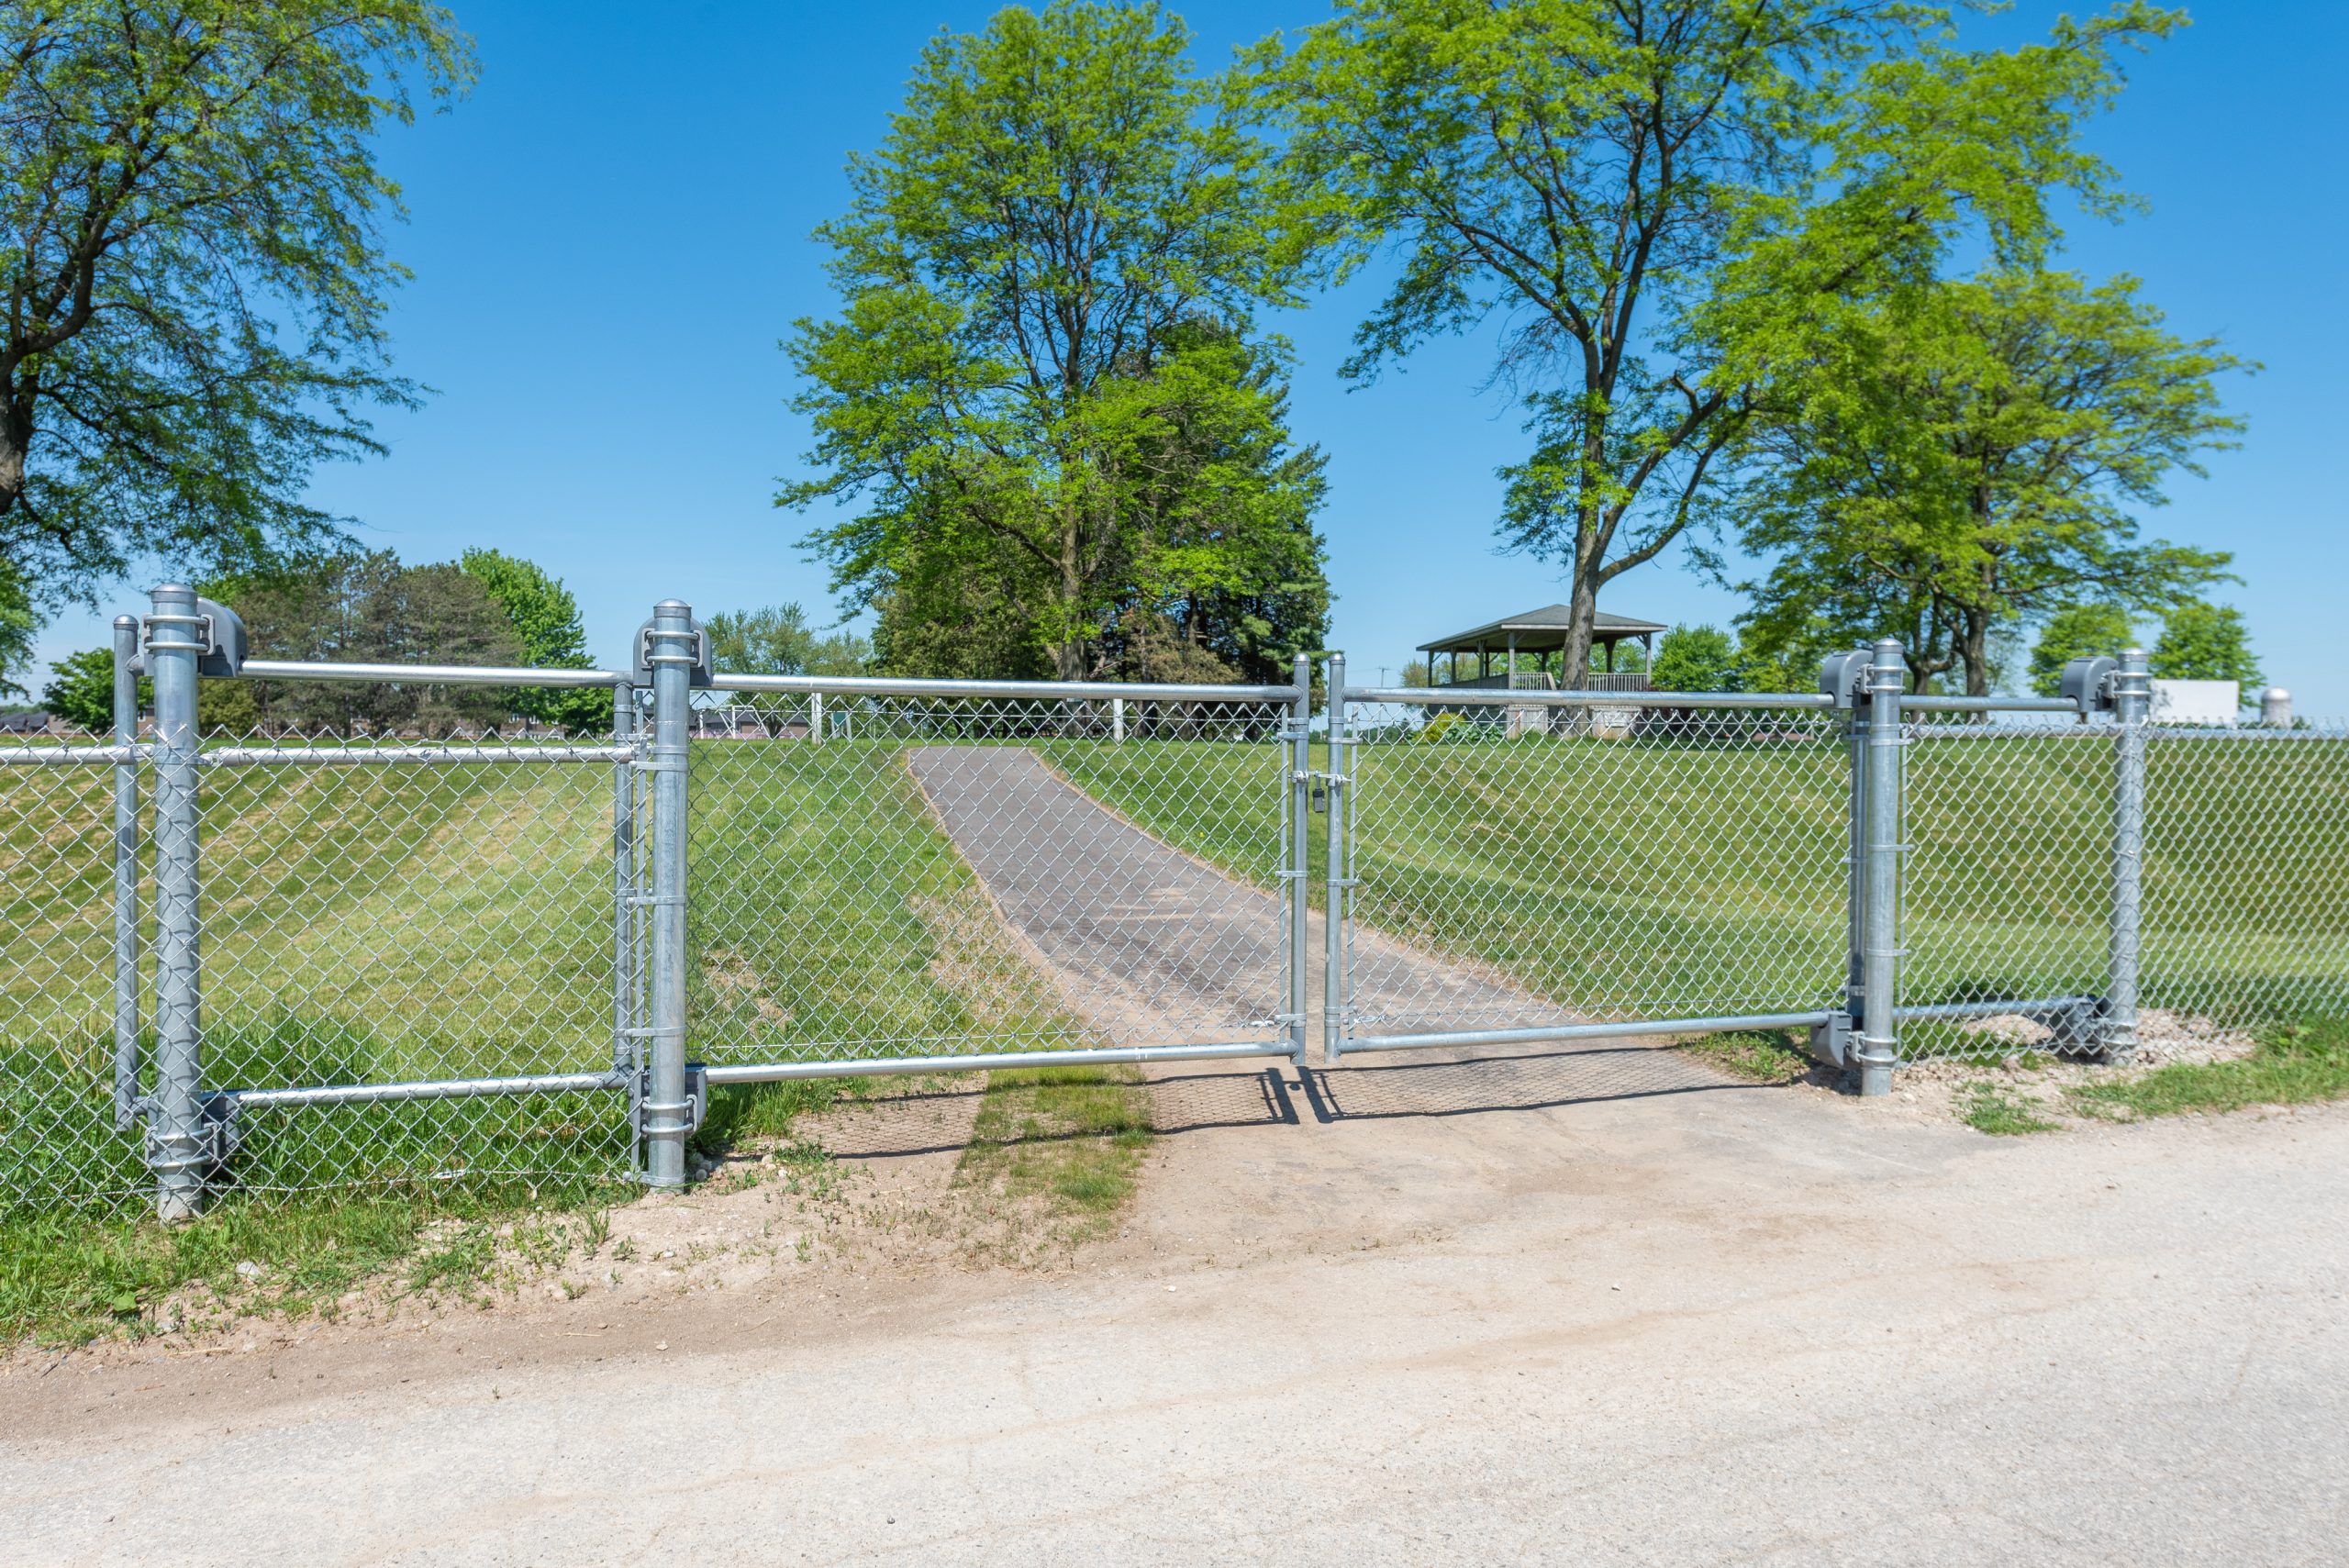 Galvanized chainlink fence gate